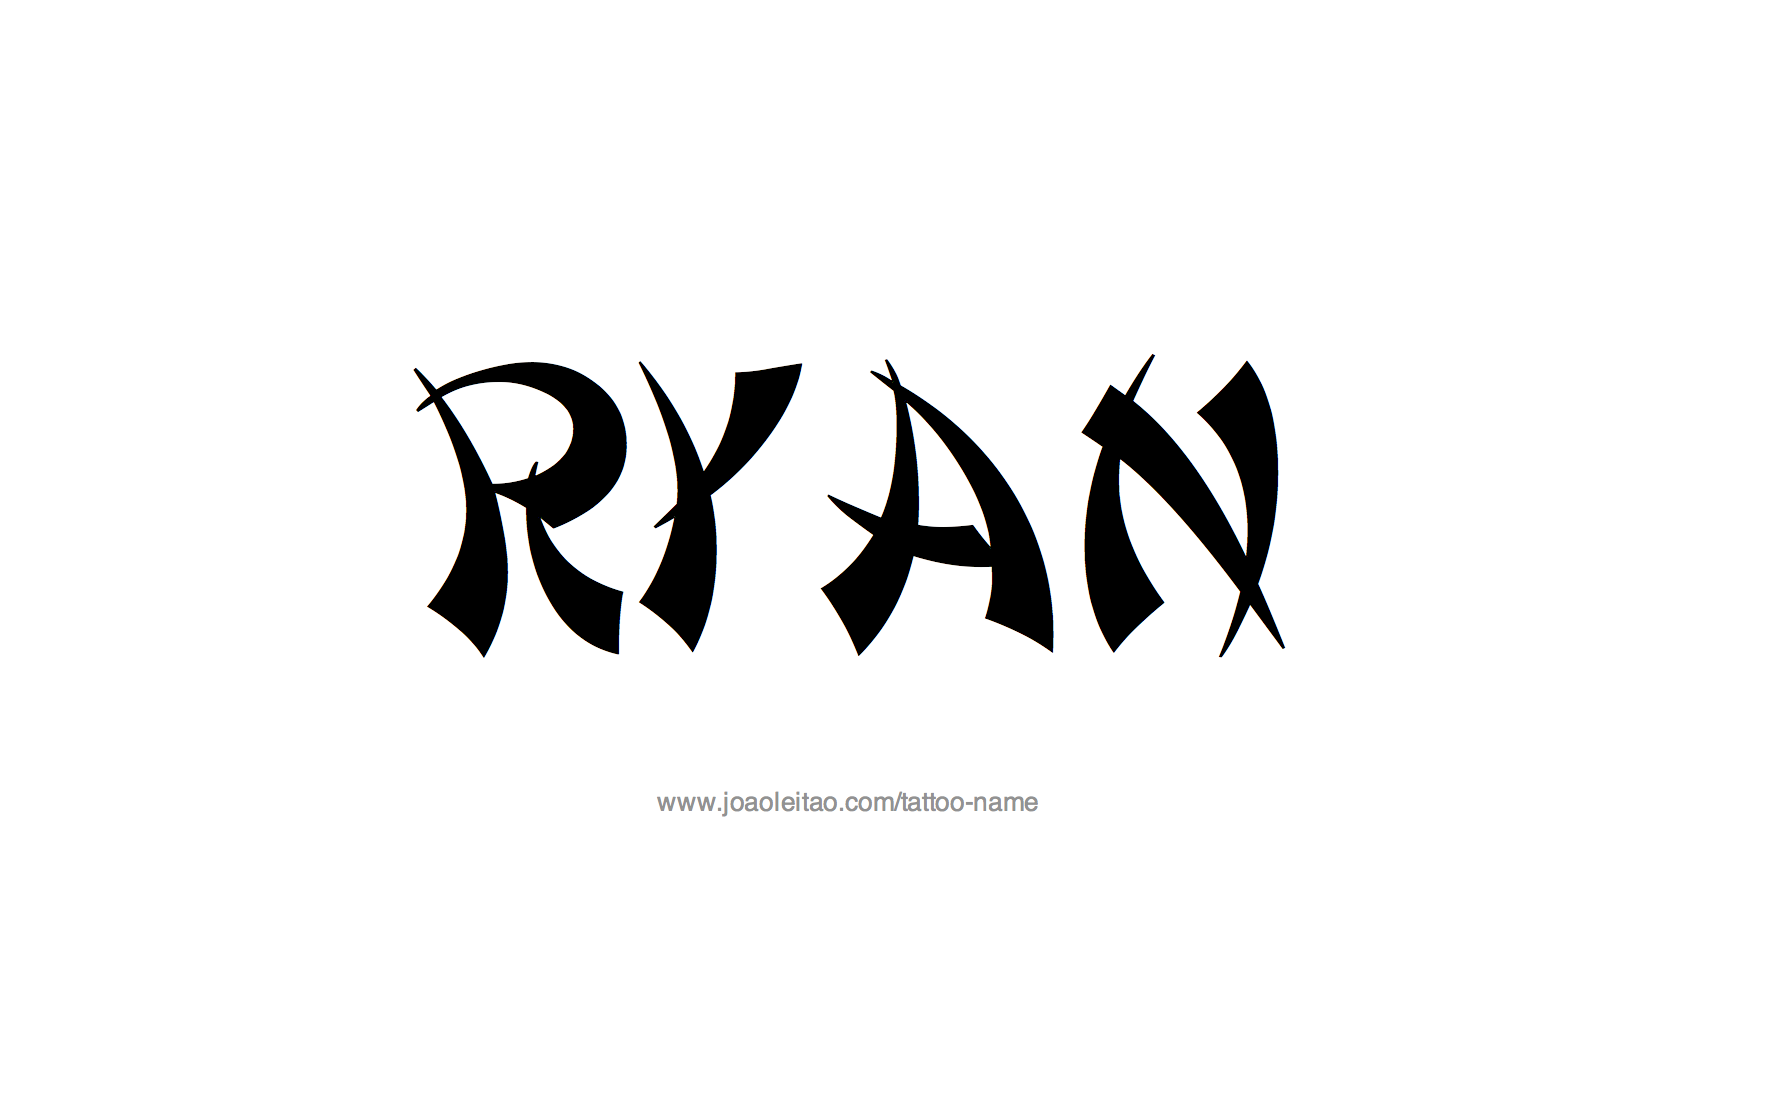 Ryan Name Tattoo Designs